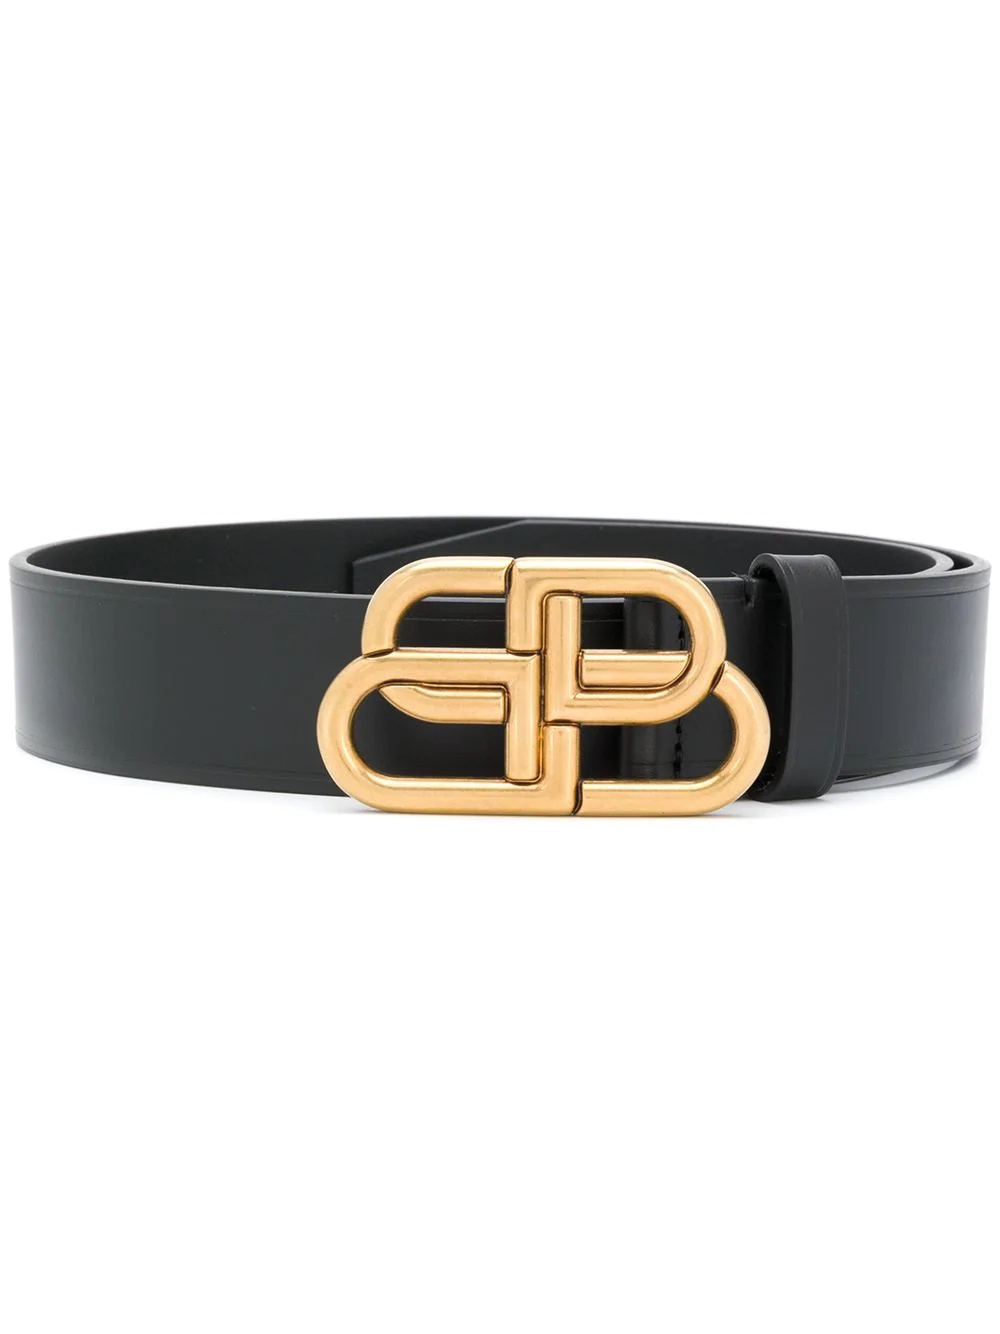 BB logo belt - 1